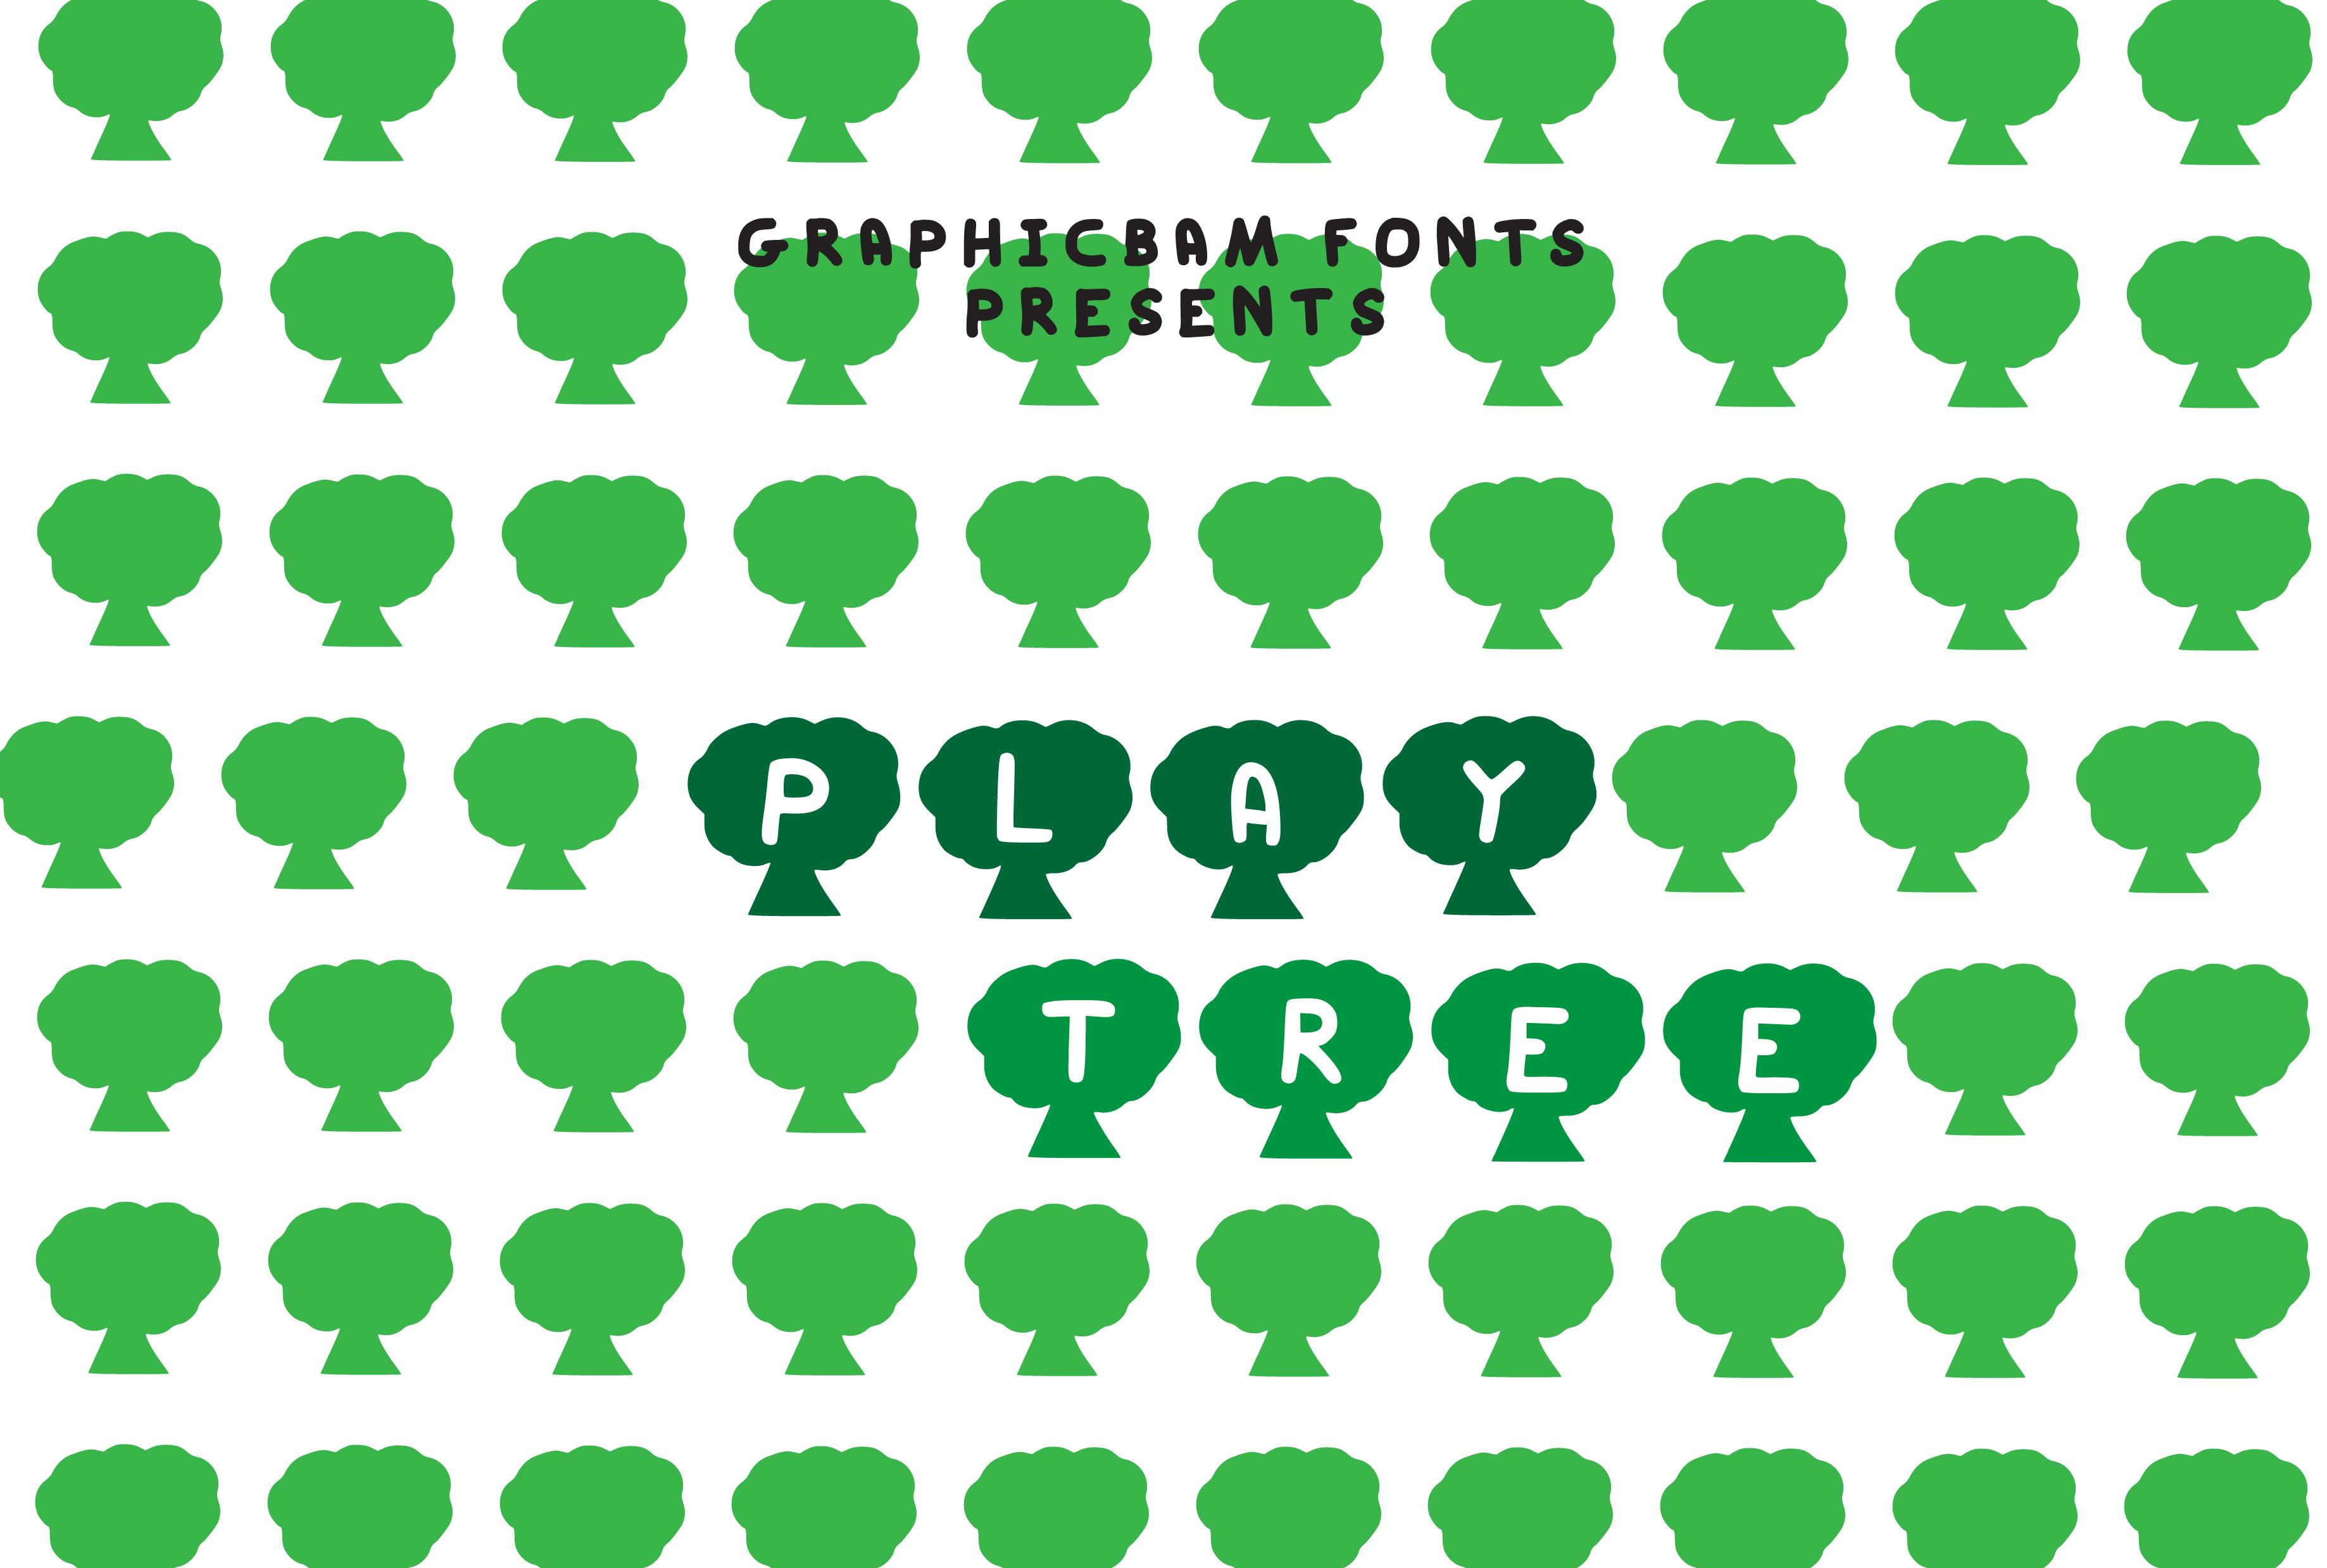 Play Tree Font